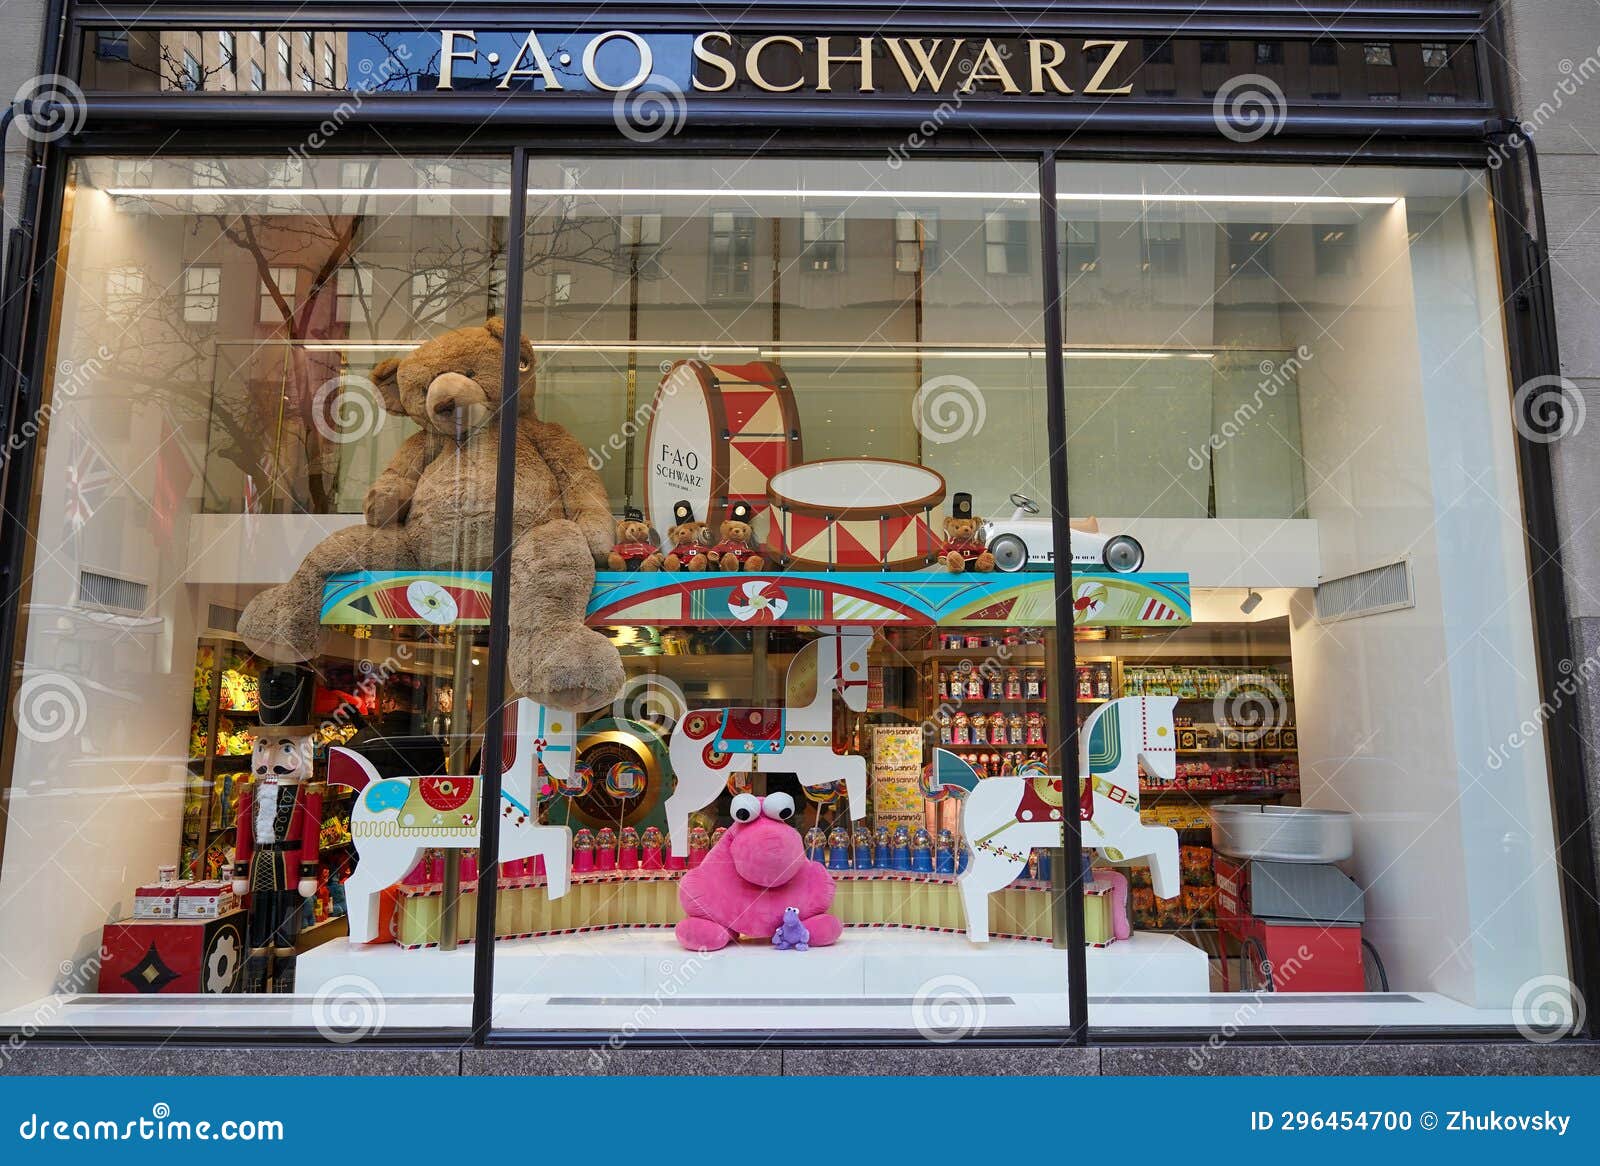 FAO Schwarz, a New York institution